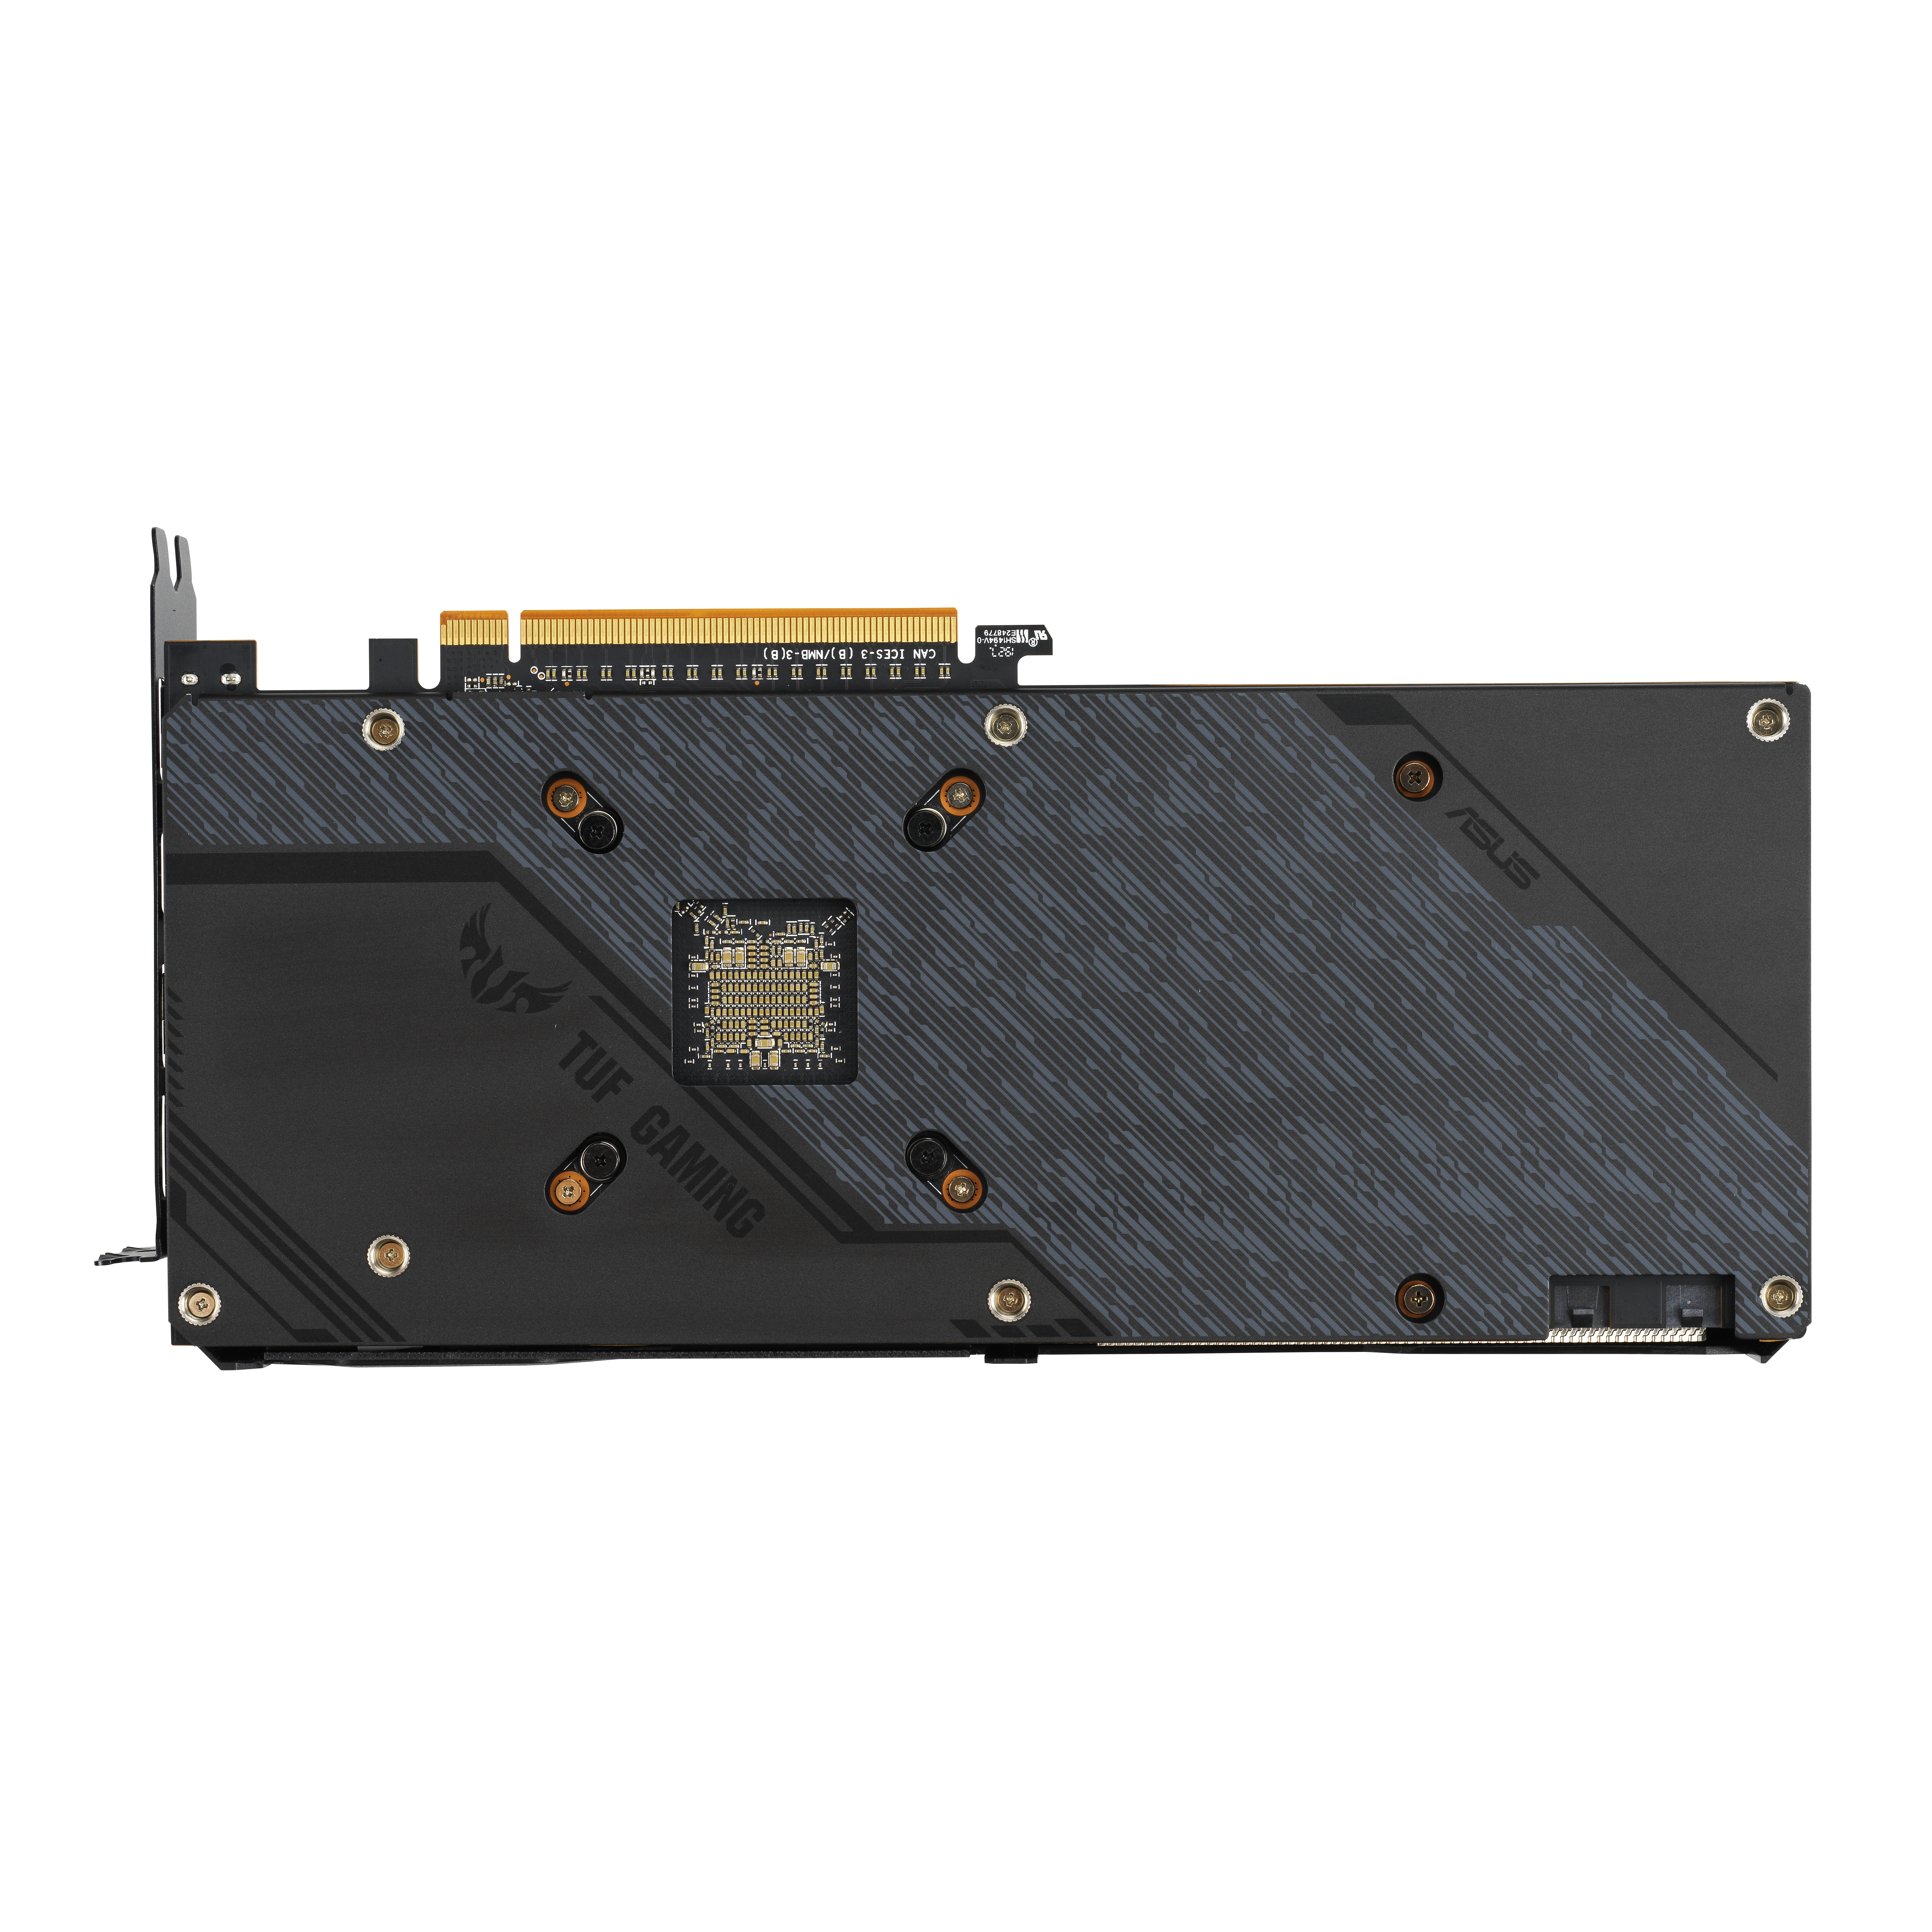 ASUS Radeon™ RX TUF 3 Grafikkarte) OC 8GB XT 5700 Gaming (90YV0DA0-M0NA00) (AMD